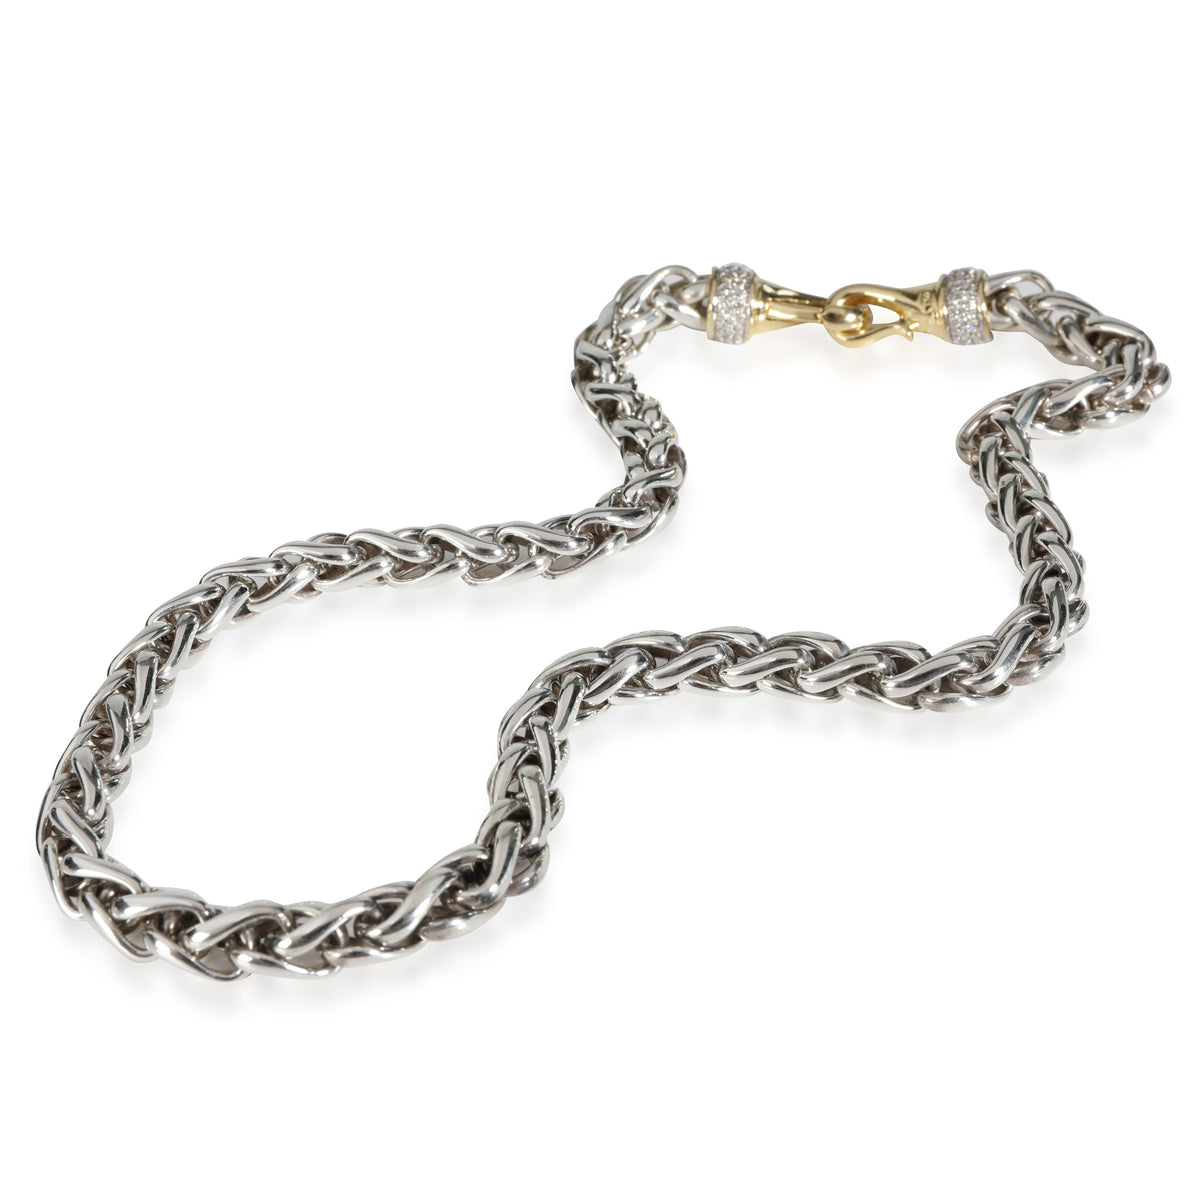 David Yurman Diamond Wheat Chain Necklace in 14K YG/SS 0.68 CT